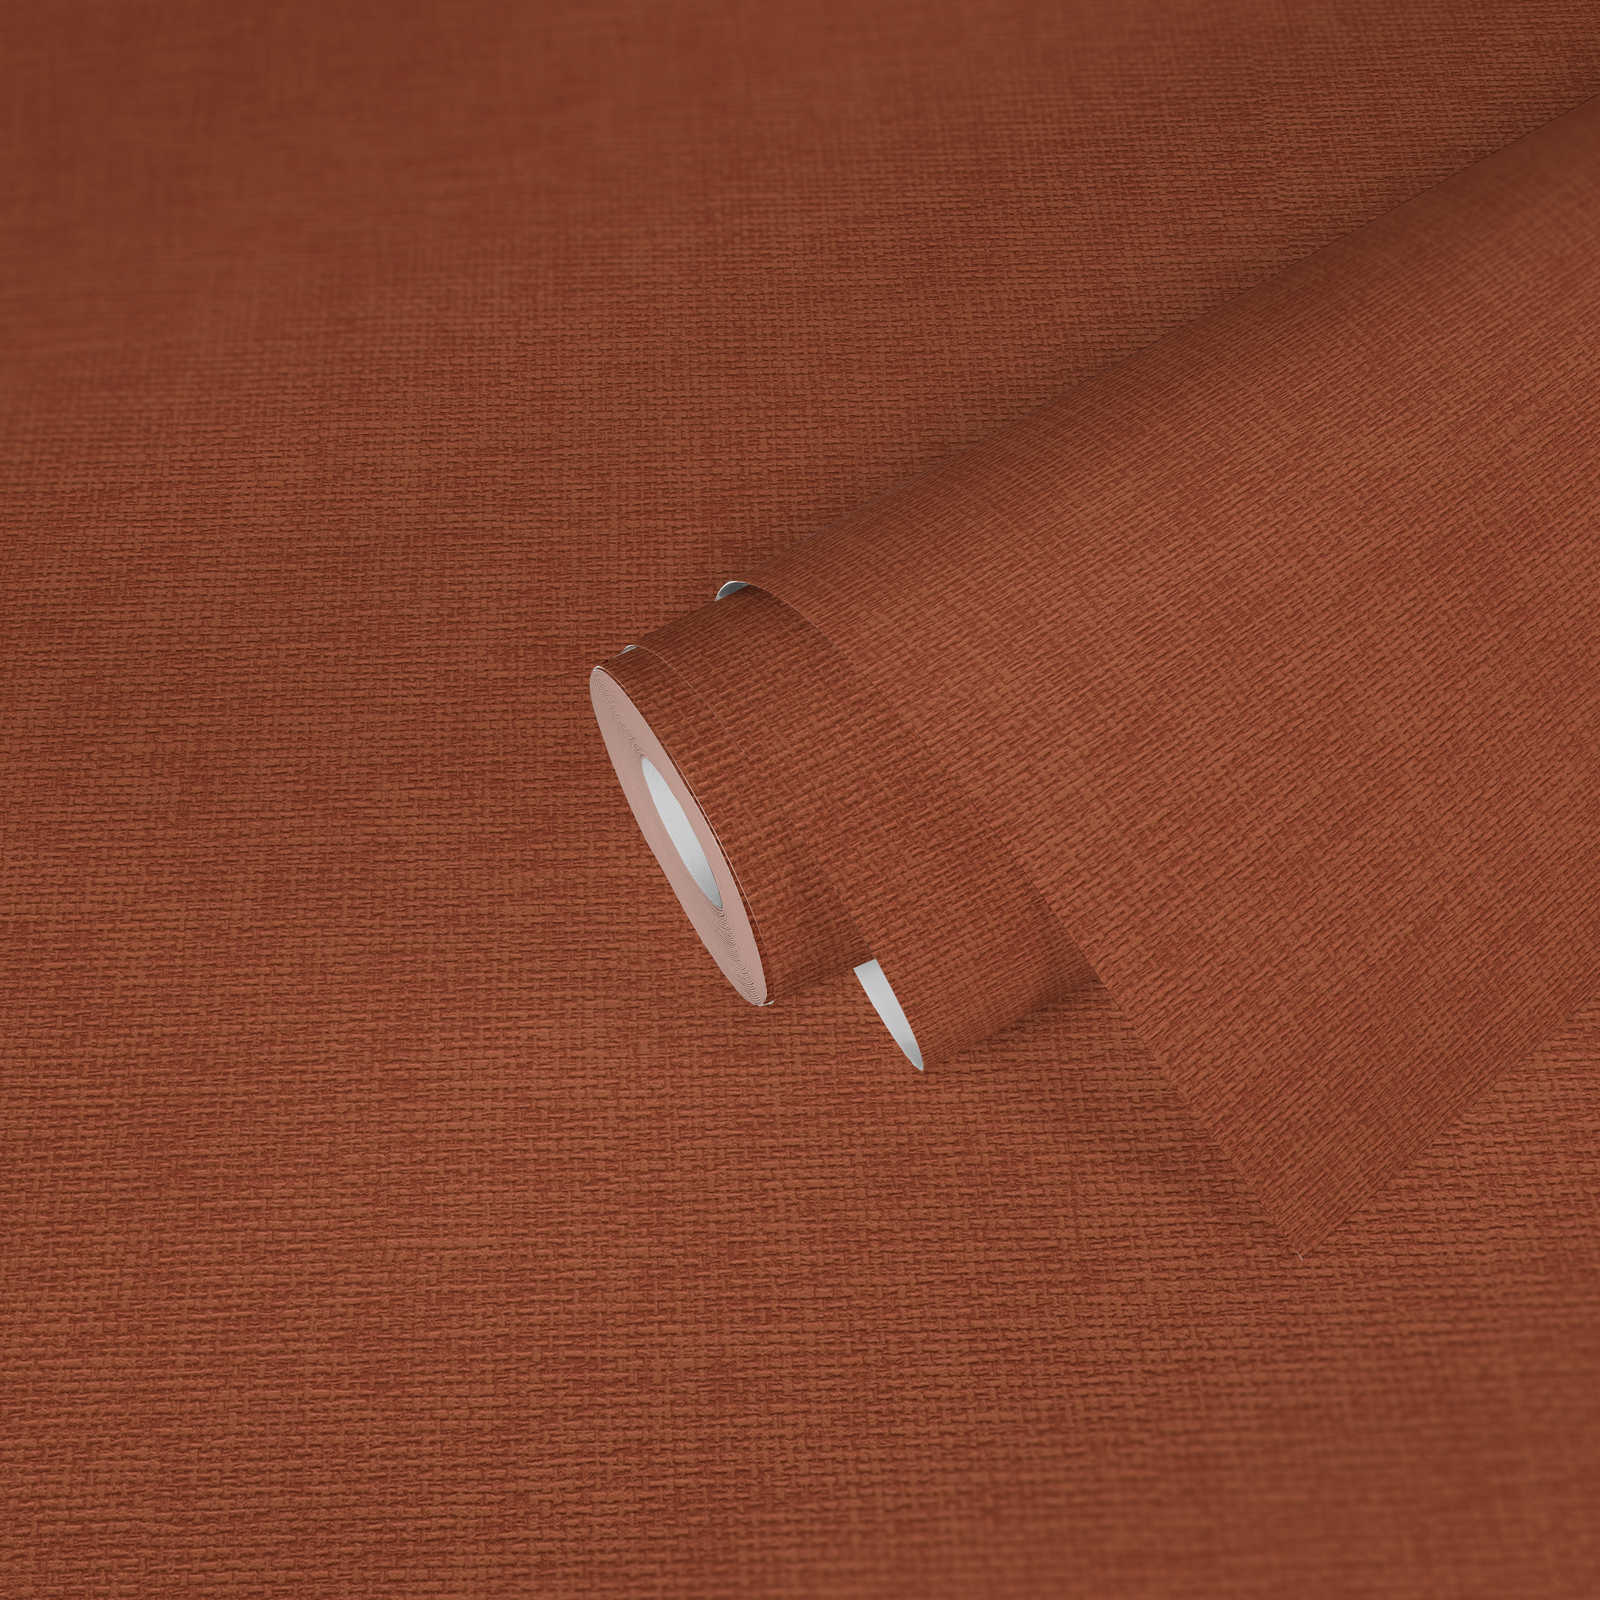             Orangerote Tapete mit Textilstruktur – Rot
        